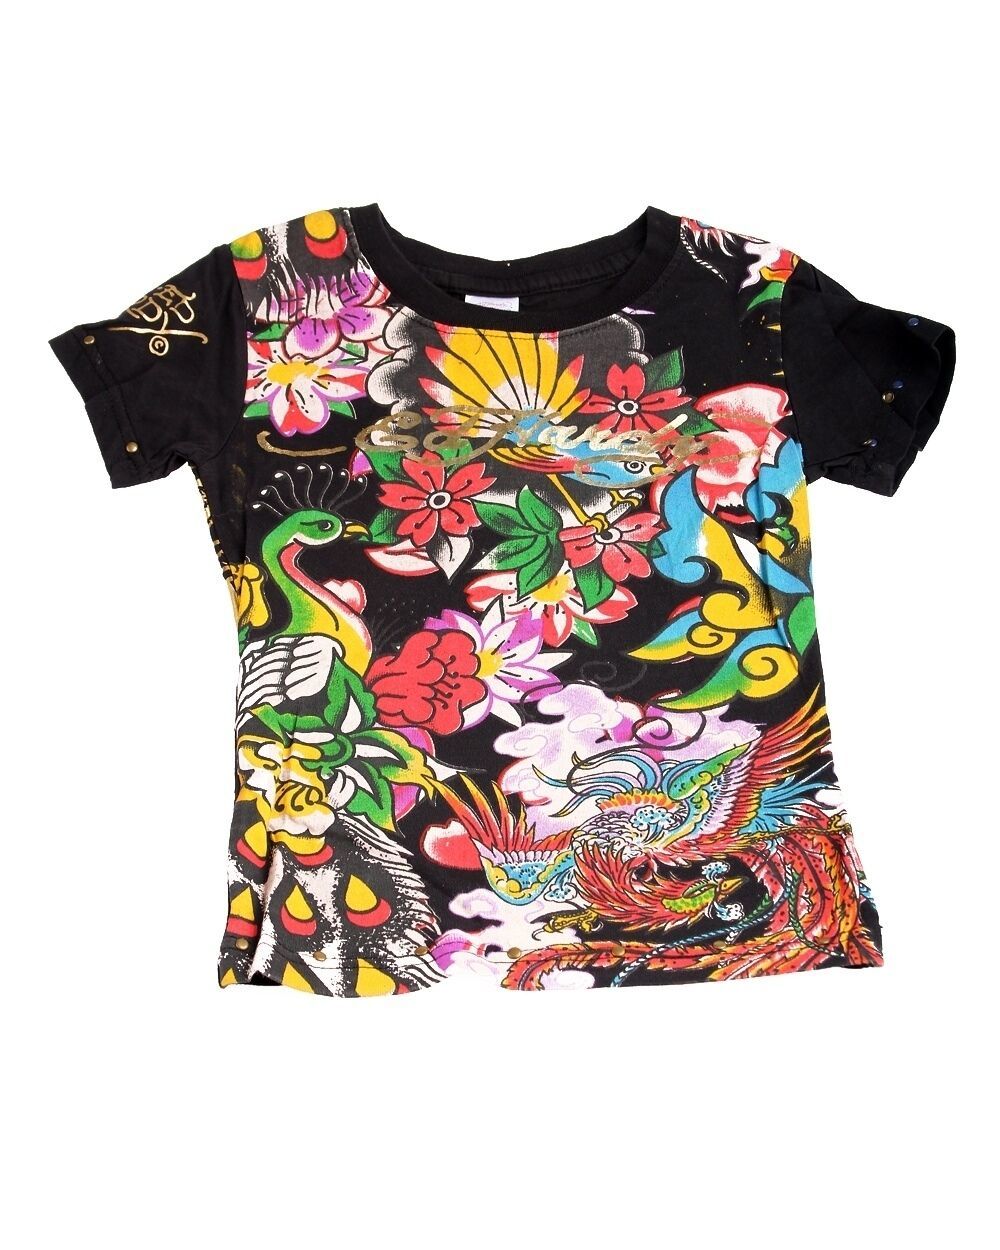 Super Cute Ed Hardy Girls Black Tee Shirt w/Birds Flowers Motif, Short Sleeve - $23.99